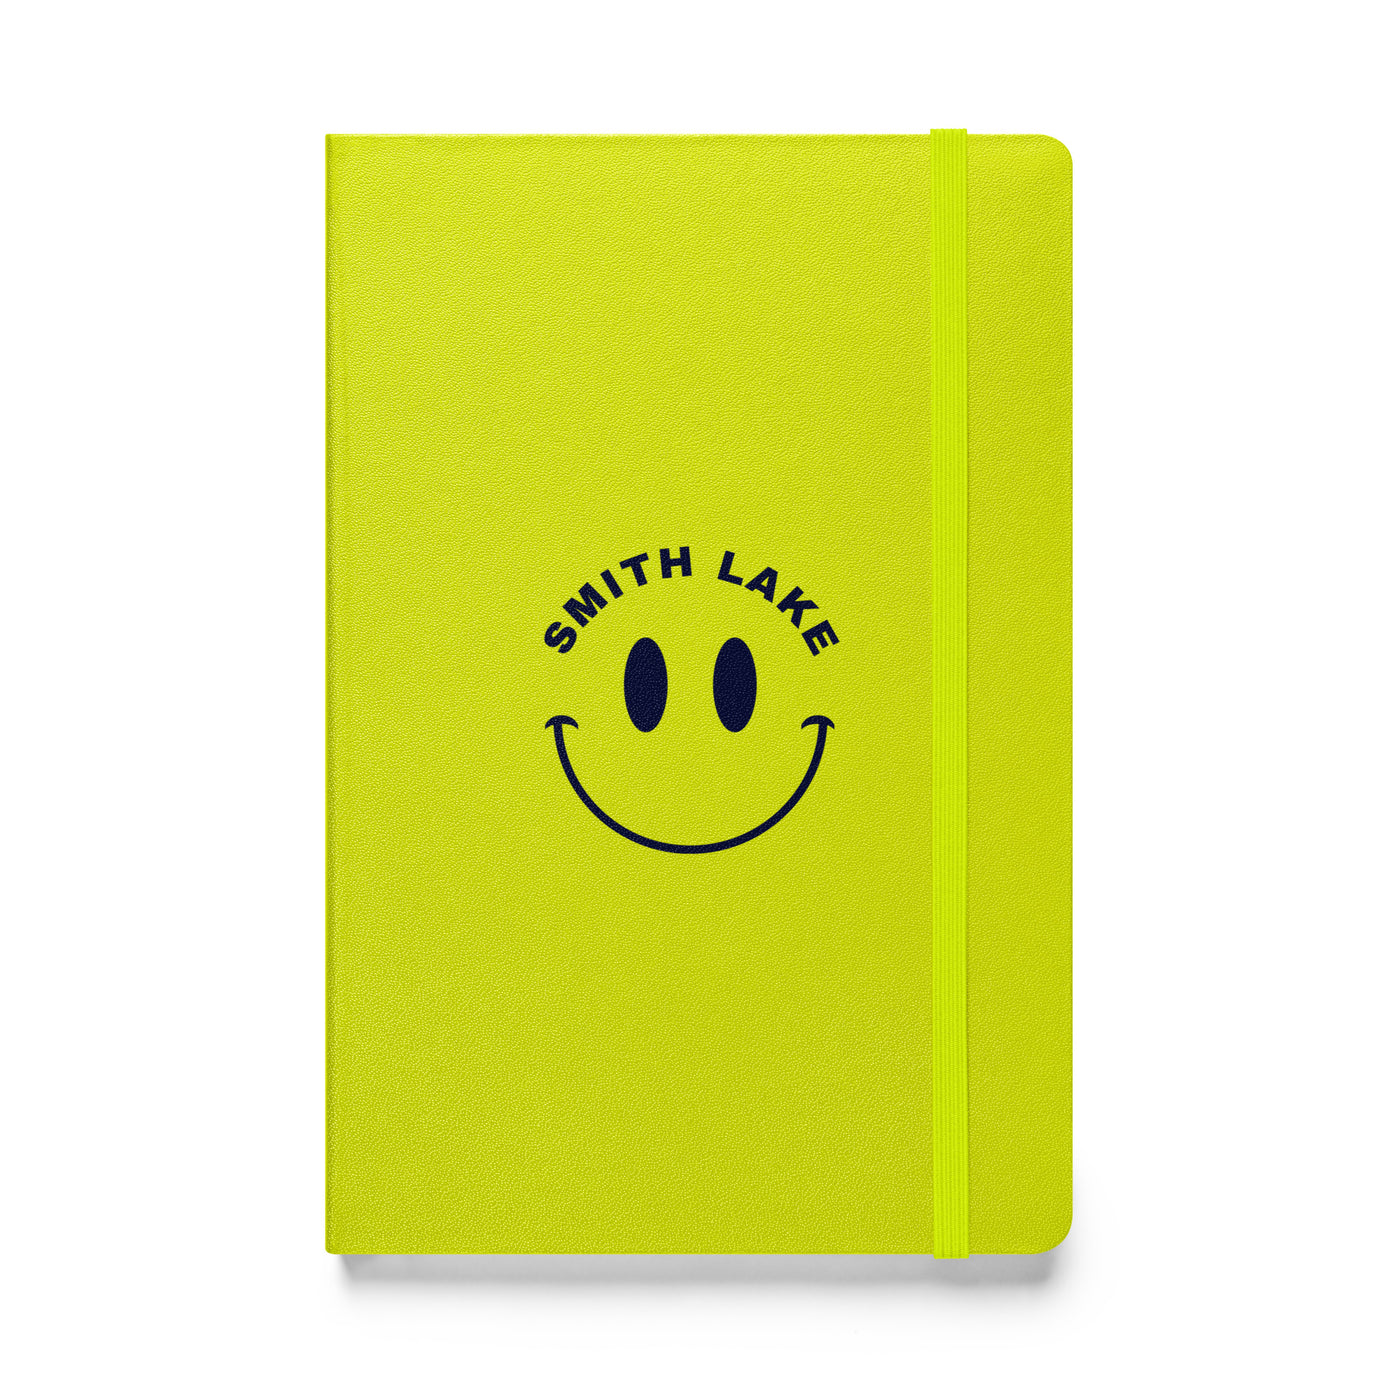 Smith Lake Hardcover Bound Notebook Notebooks Ezra's Clothing Lime  